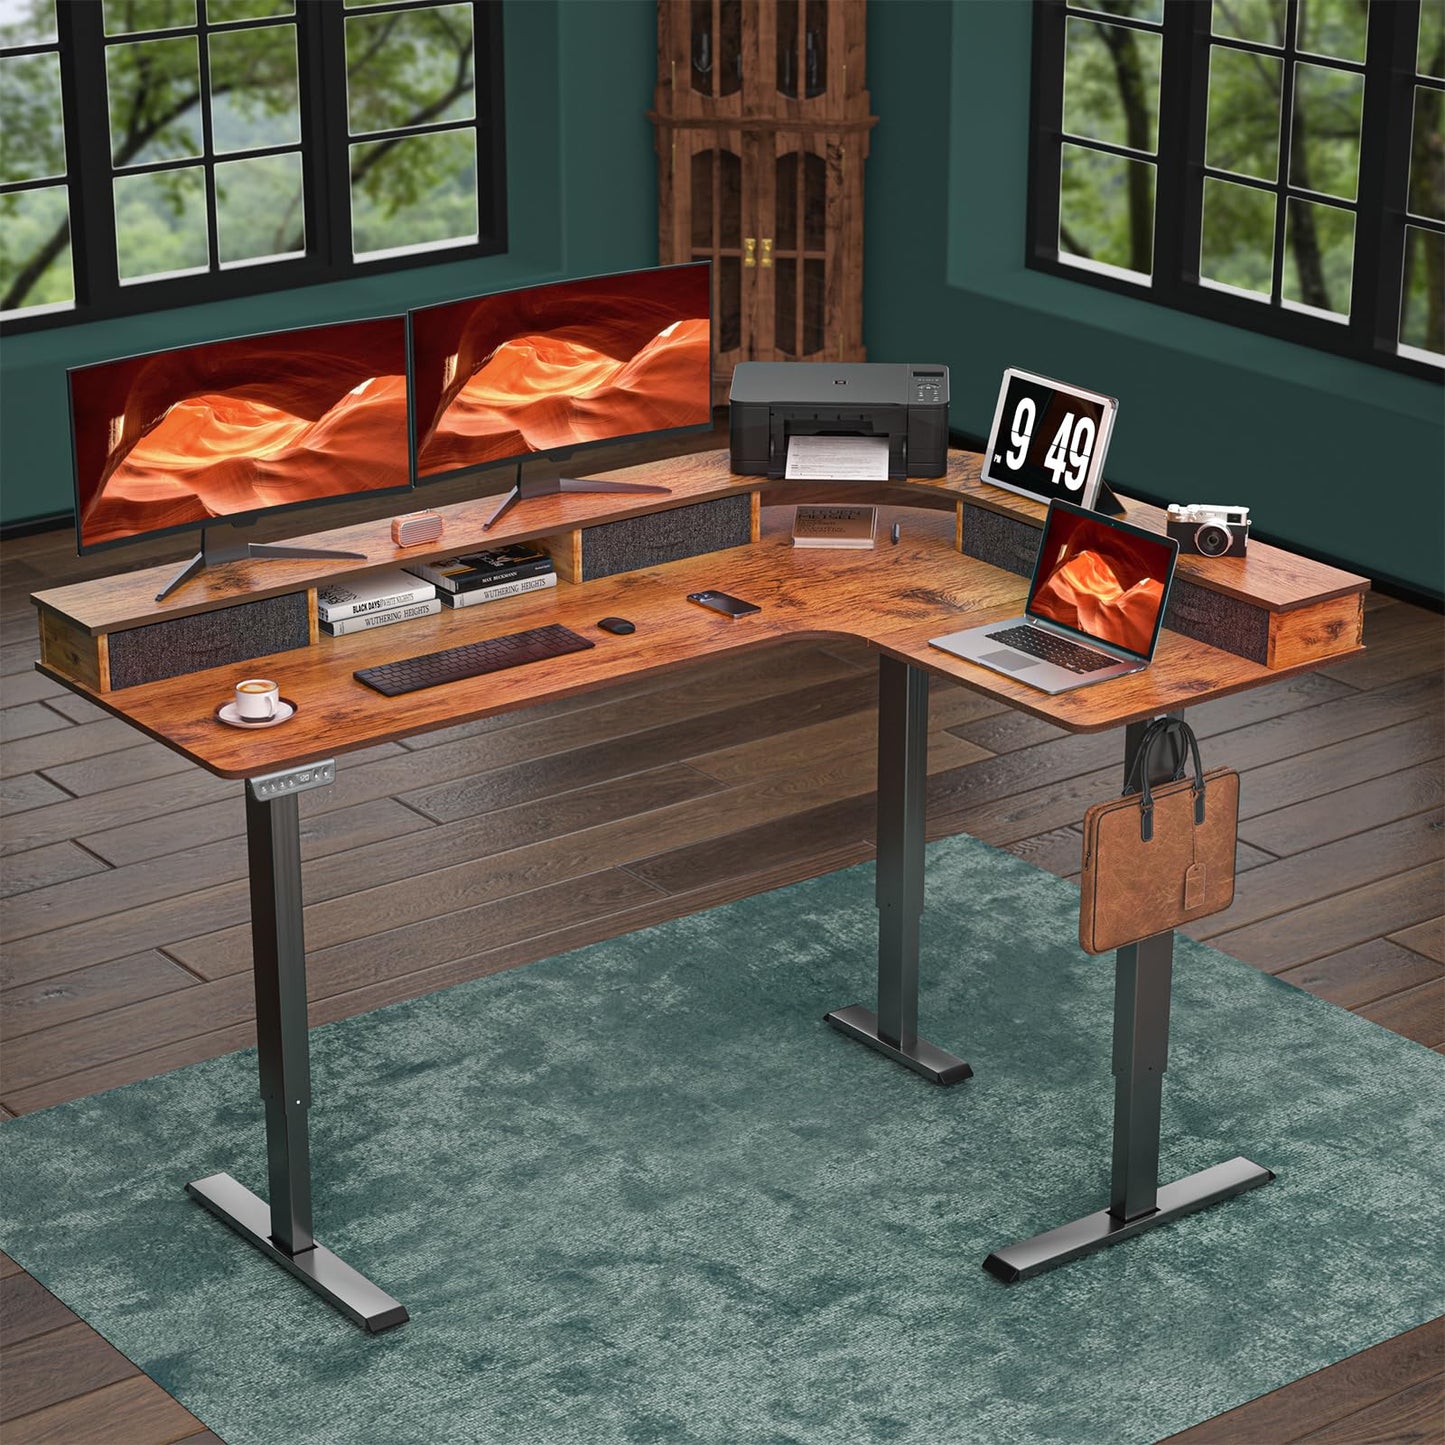 REGISDESK L Shape Standing Desk, 67 * 48 Inches Adjustable Height Standing Desk with 4 Drawers, Corner Electric Standing Desk with Monitor Stand for